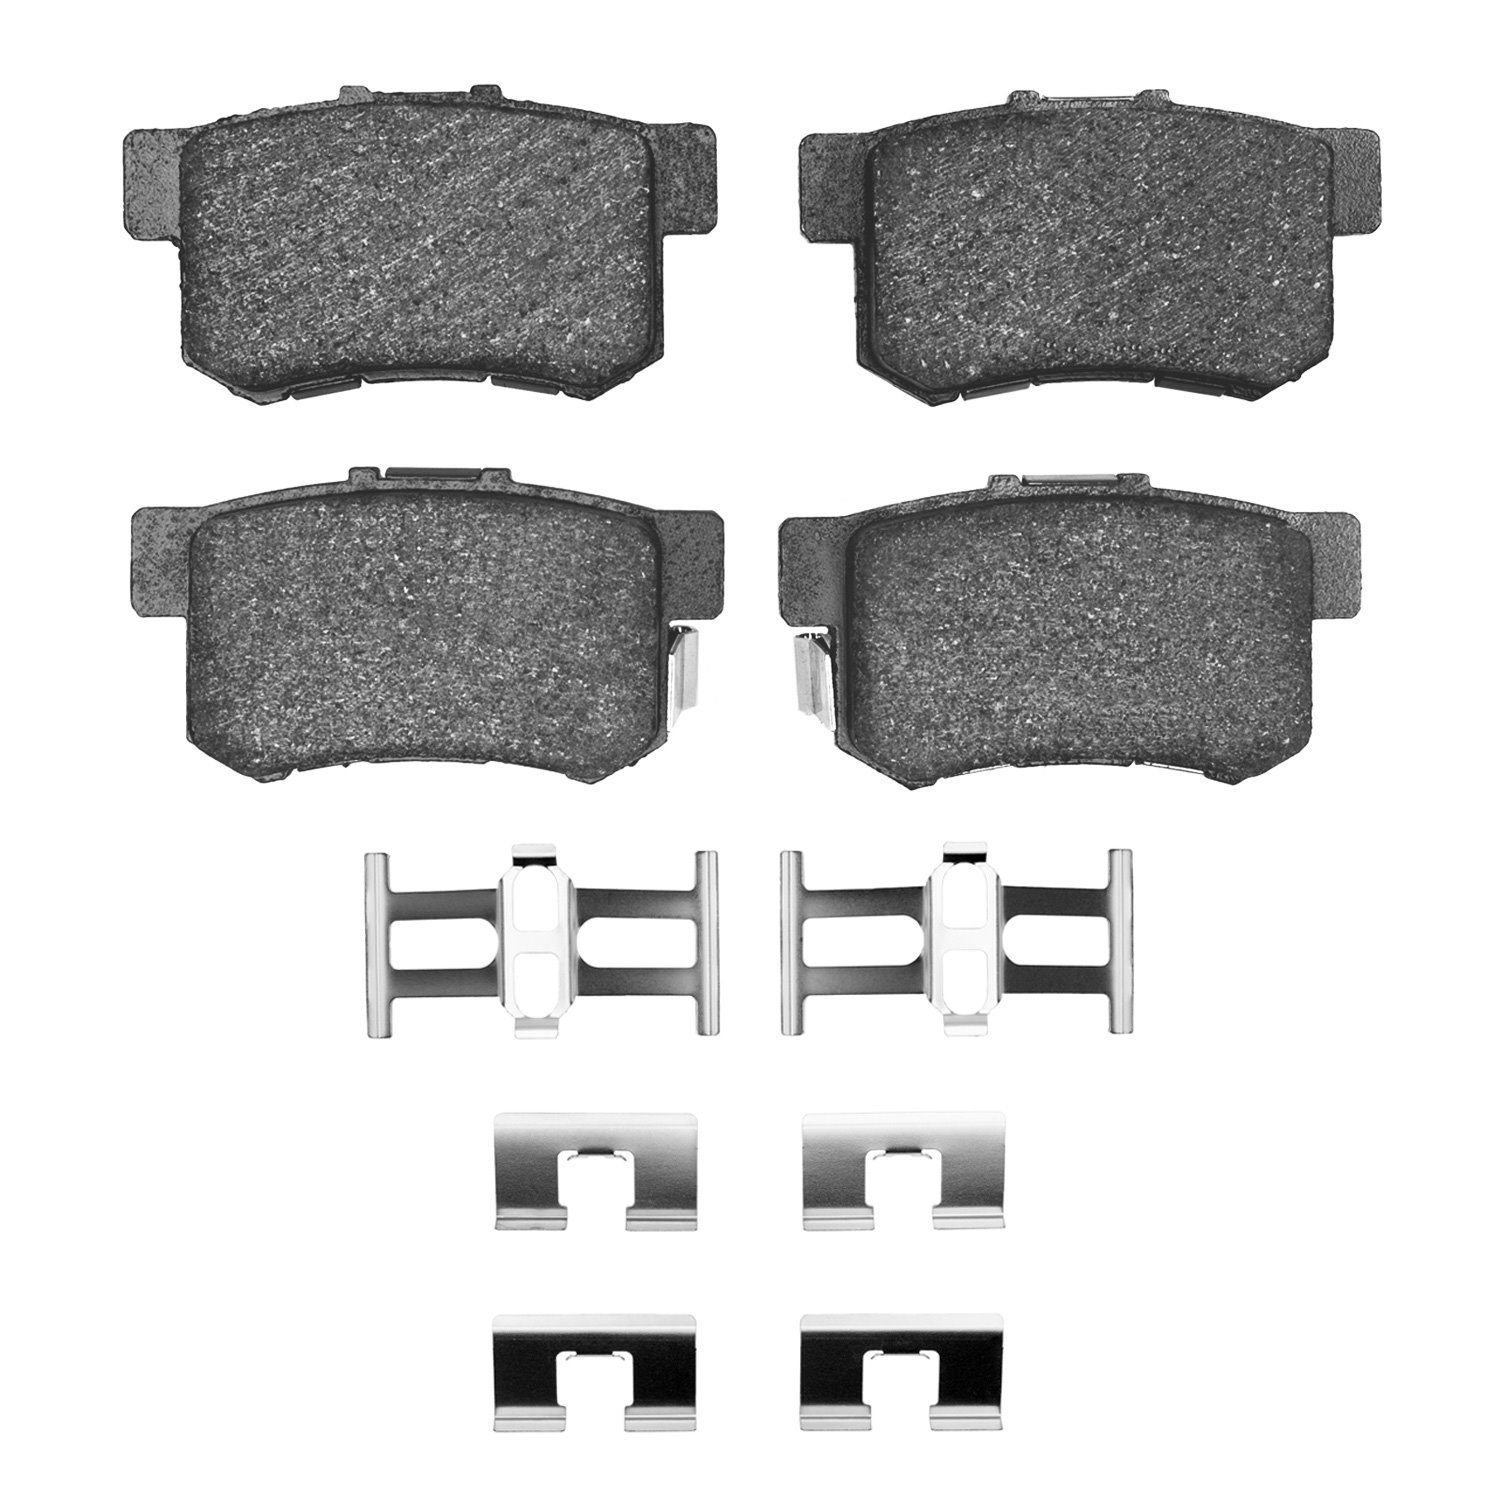 Ceramic Brake Pads & Hardware Kit, 1991-2012 Fits Multiple Makes/Models, Position: Rear